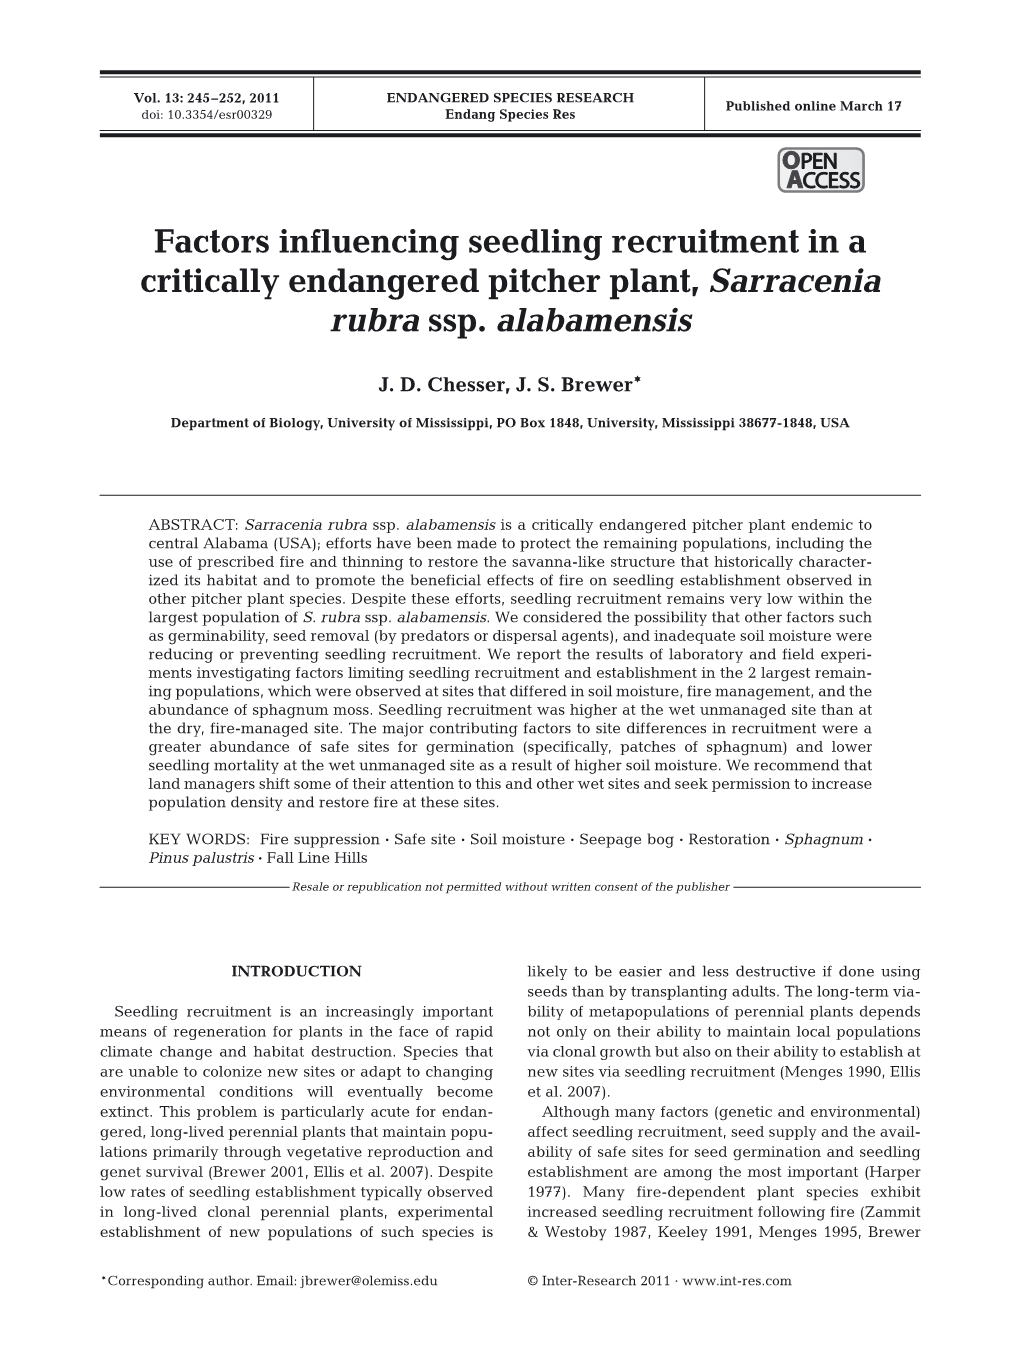 Factors Influencing Seedling Recruitment in a Critically Endangered Pitcher Plant, Sarracenia Rubra Ssp. Alabamensis